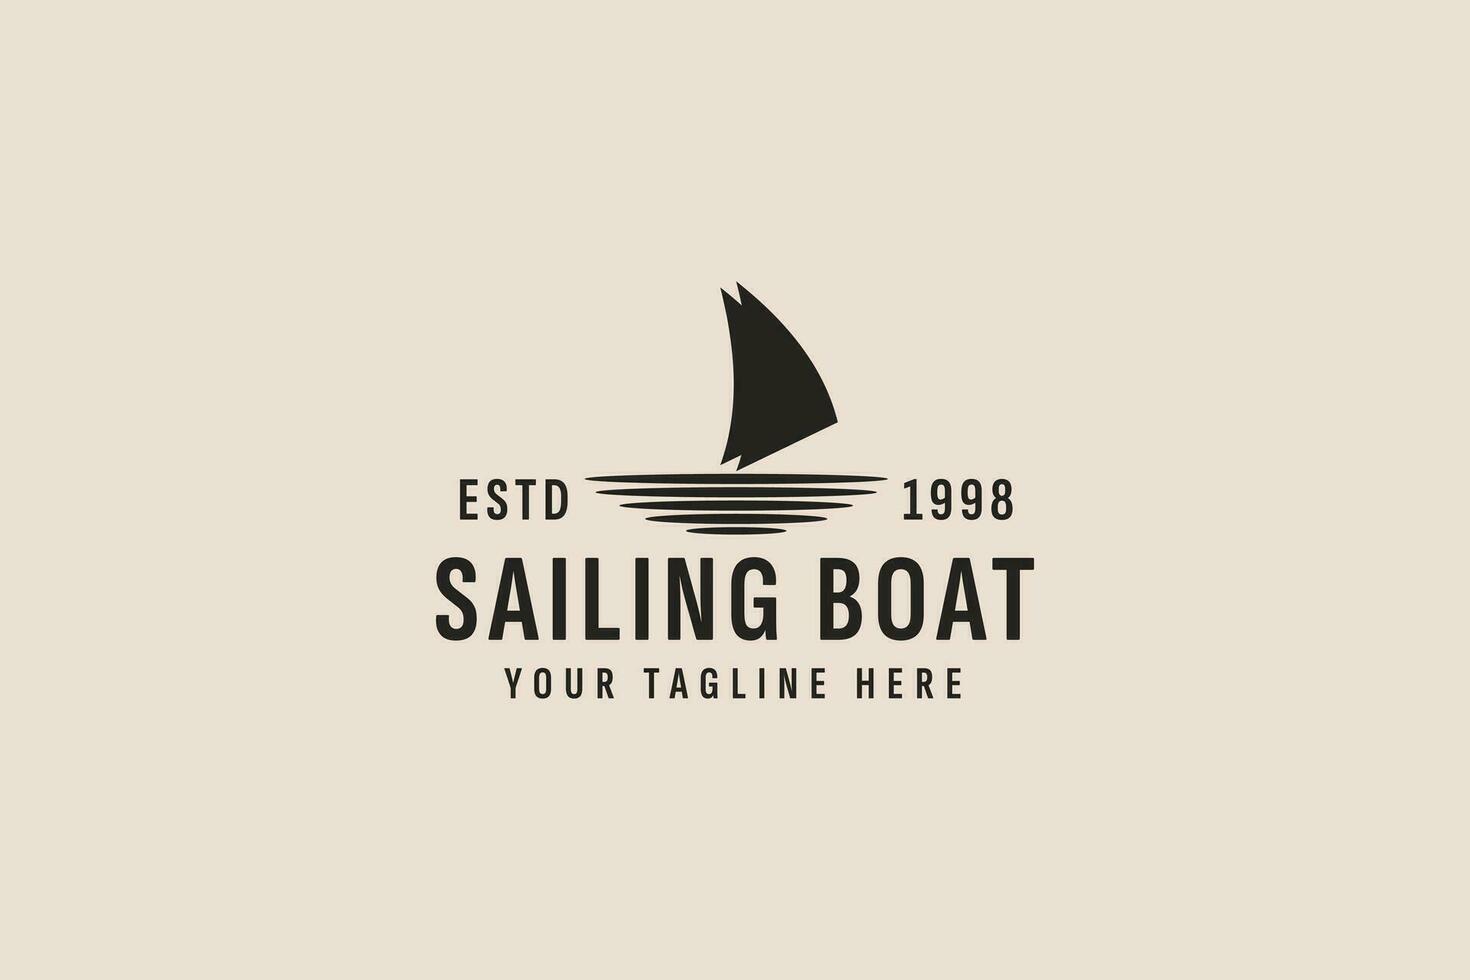 vintage style sailing boat logo vector icon illustration